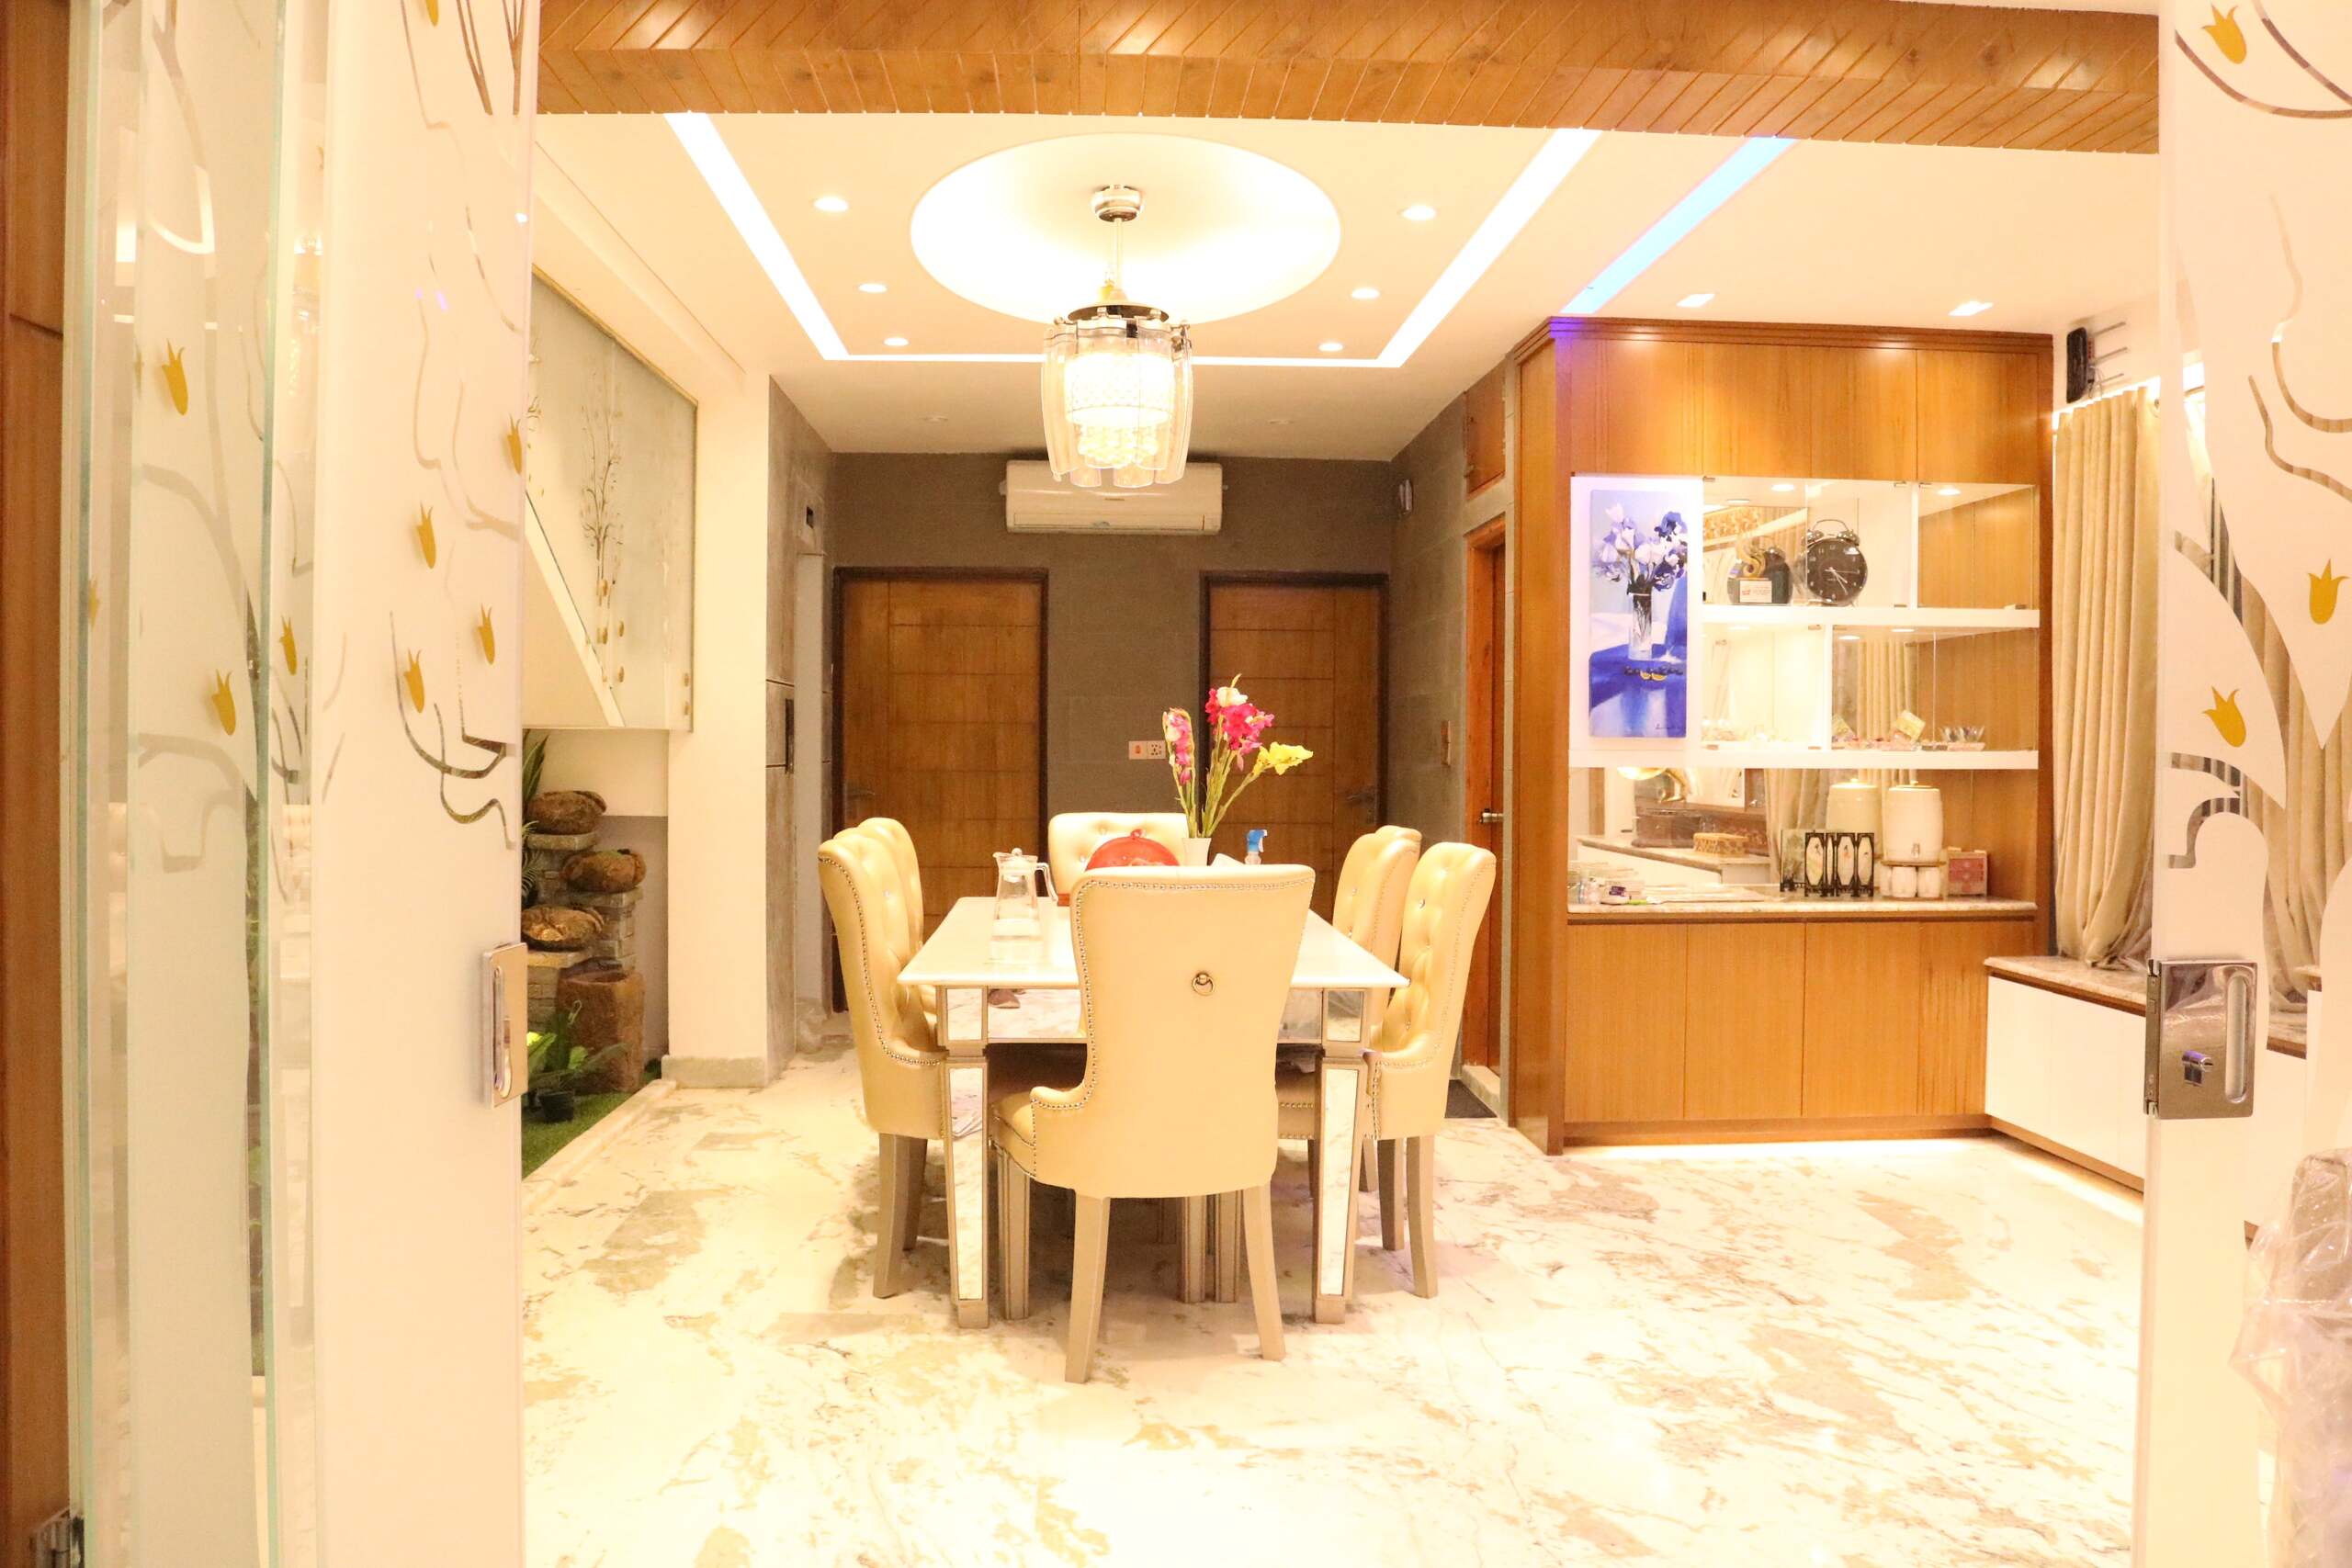 Osman Goni Mansur Chittagong Complete Project Dining Room Interior Design (15)